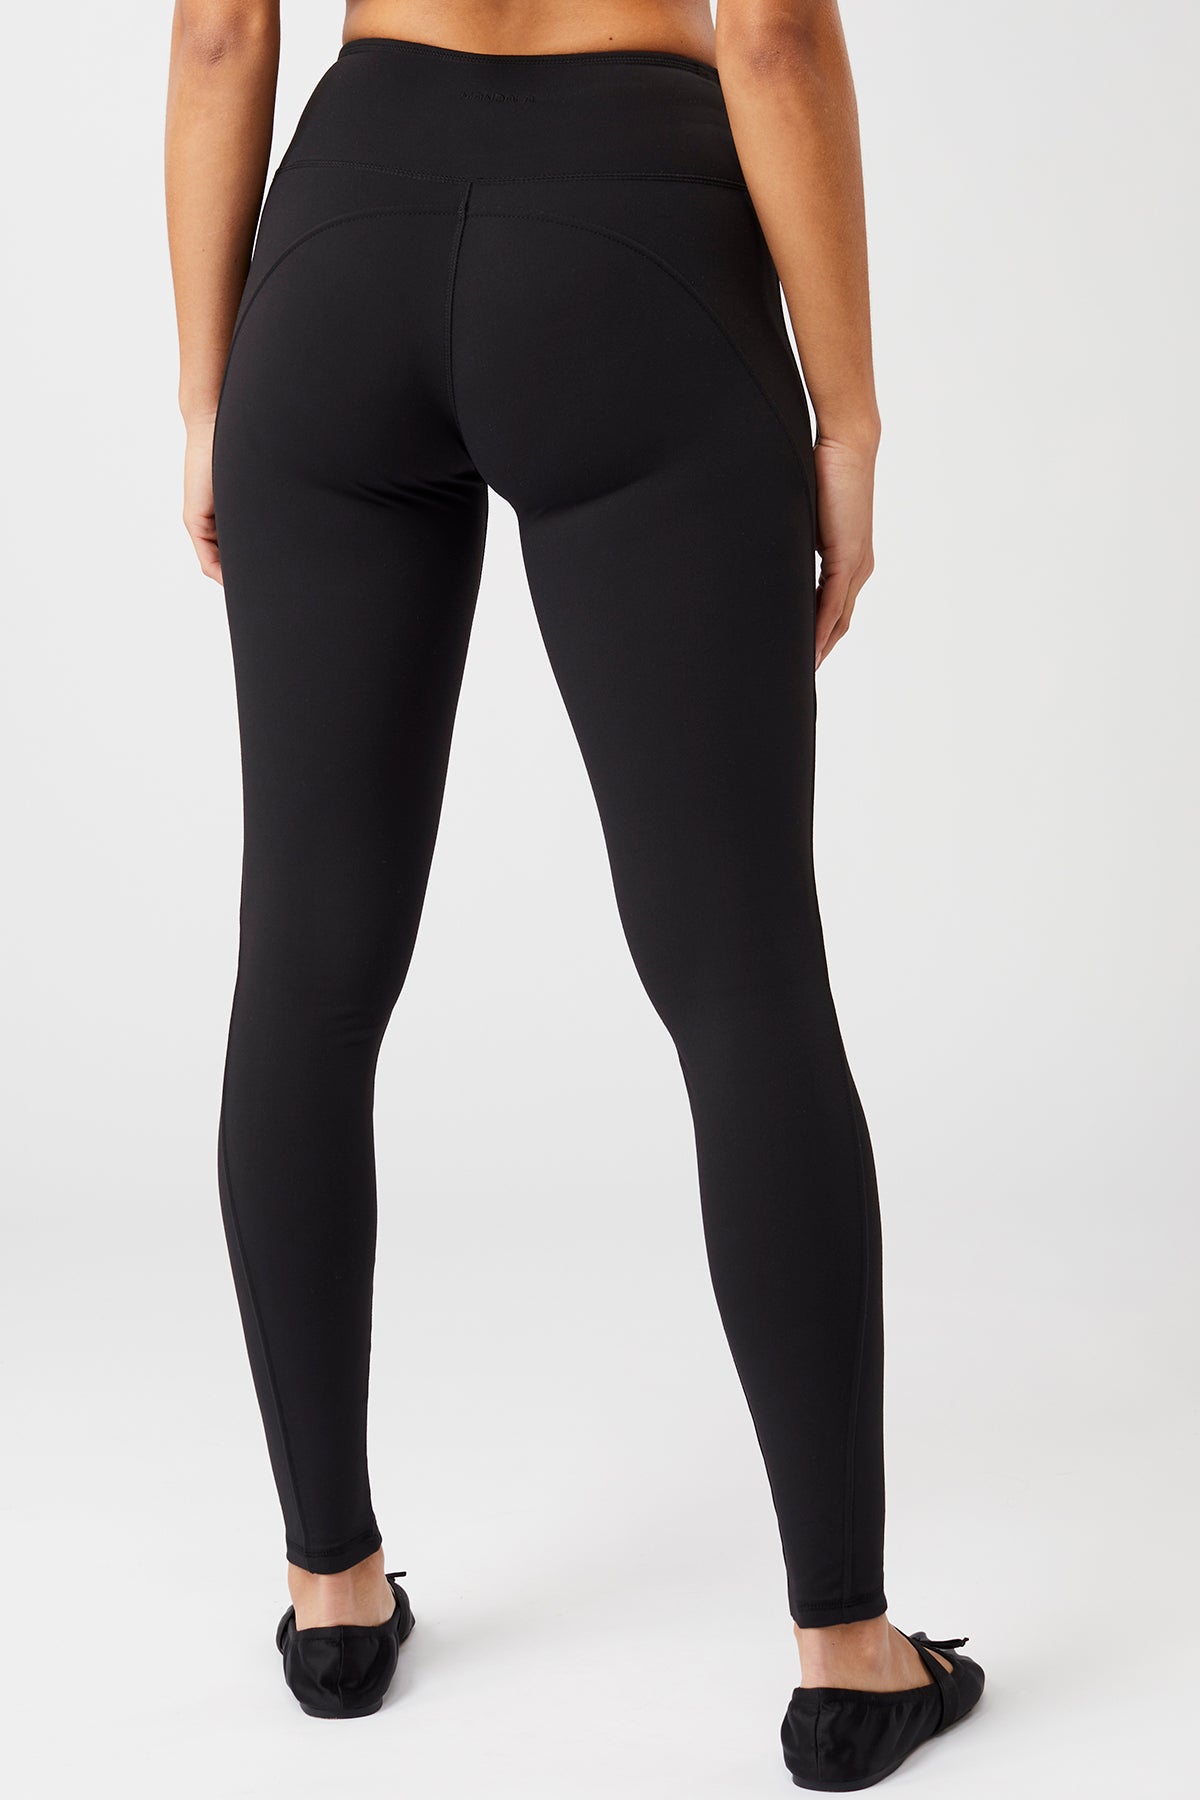 Mandala Yoga Legging Schwarz Rückseite - Miami Pants